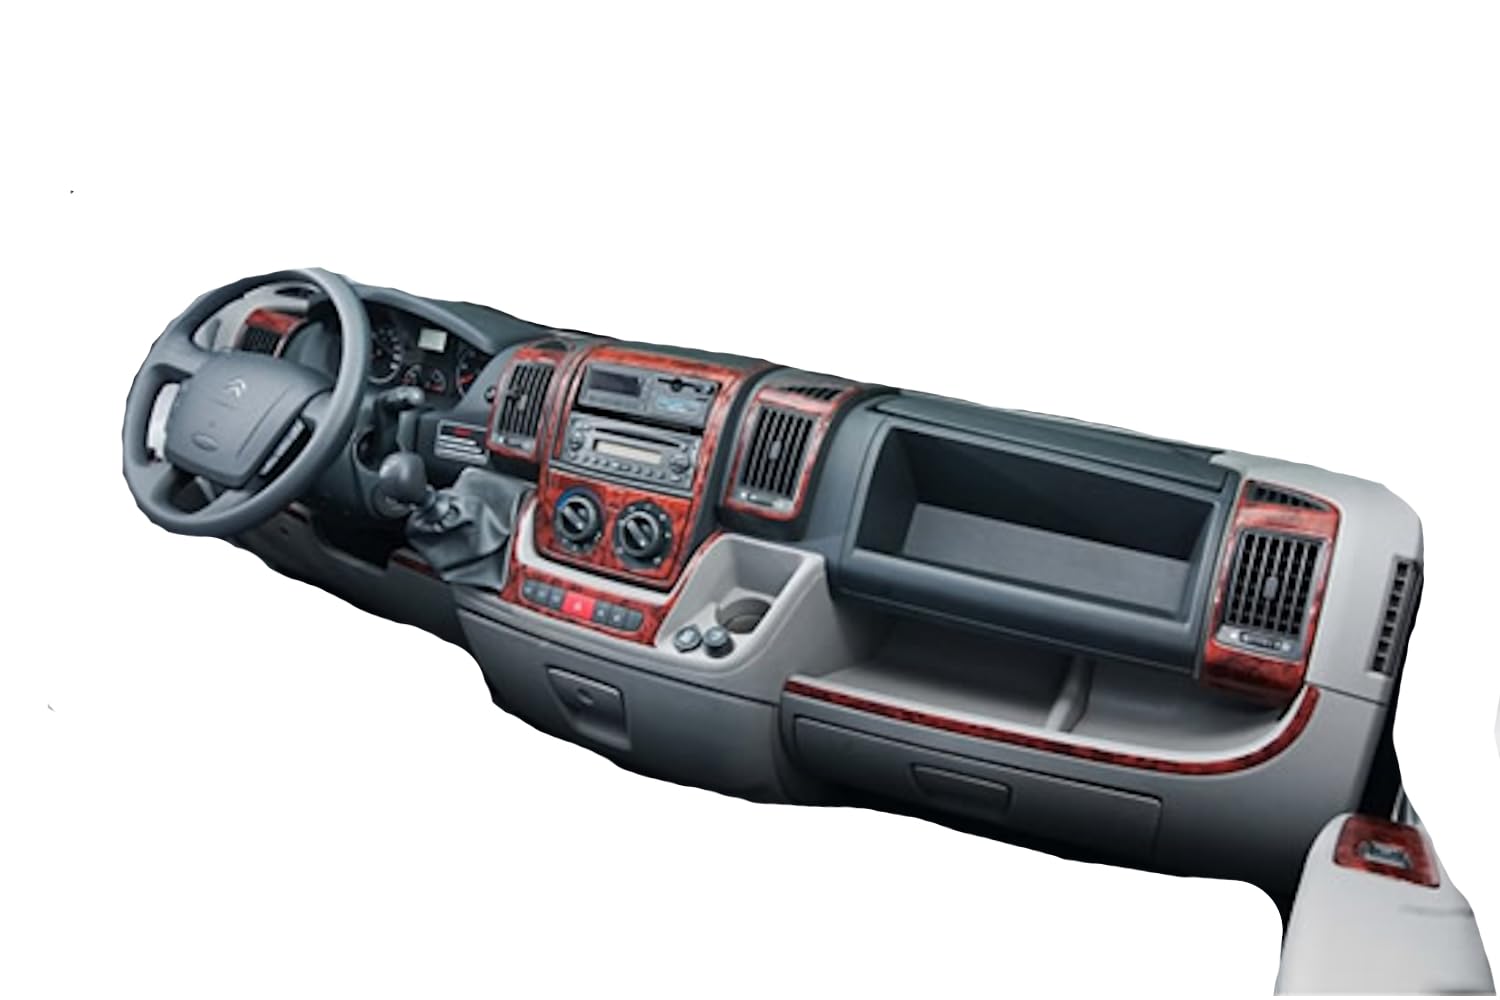 AUTOKLEIDUNG® Cockpit Dekor kompatibel mit Fiat Ducato ab Baujahr 02/2006 22 Teile | 3D Wurzelholz Optik von Autokleidung